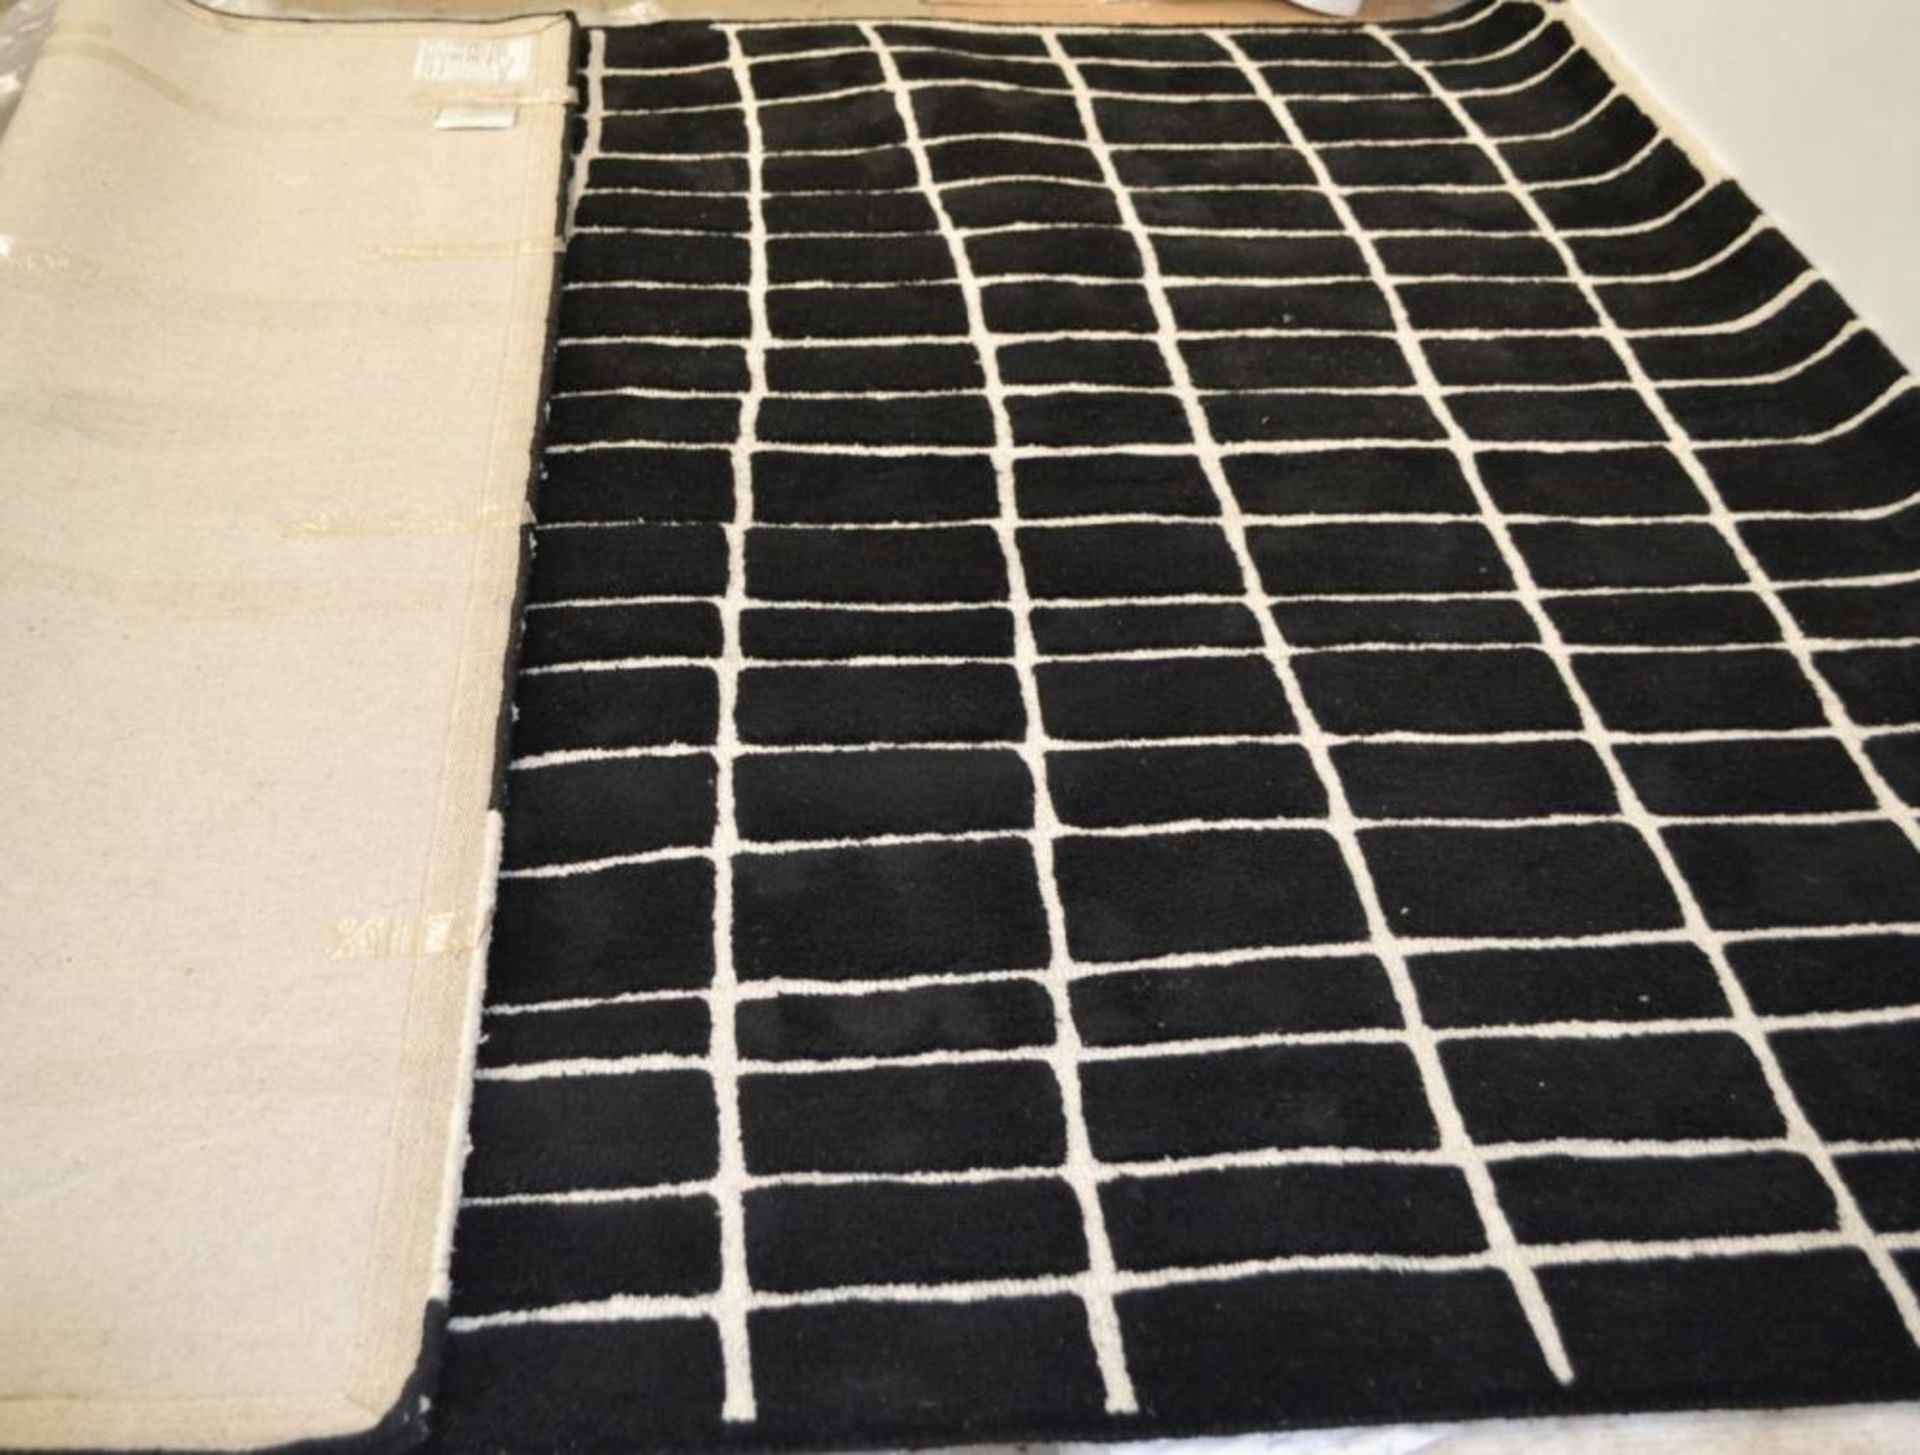 1 x LIGNE ROSET 'Quadric' 100% Wool Rug In Black Designed By René Barba - 260 x 300cm - Ref: 5688589 - Image 4 of 6